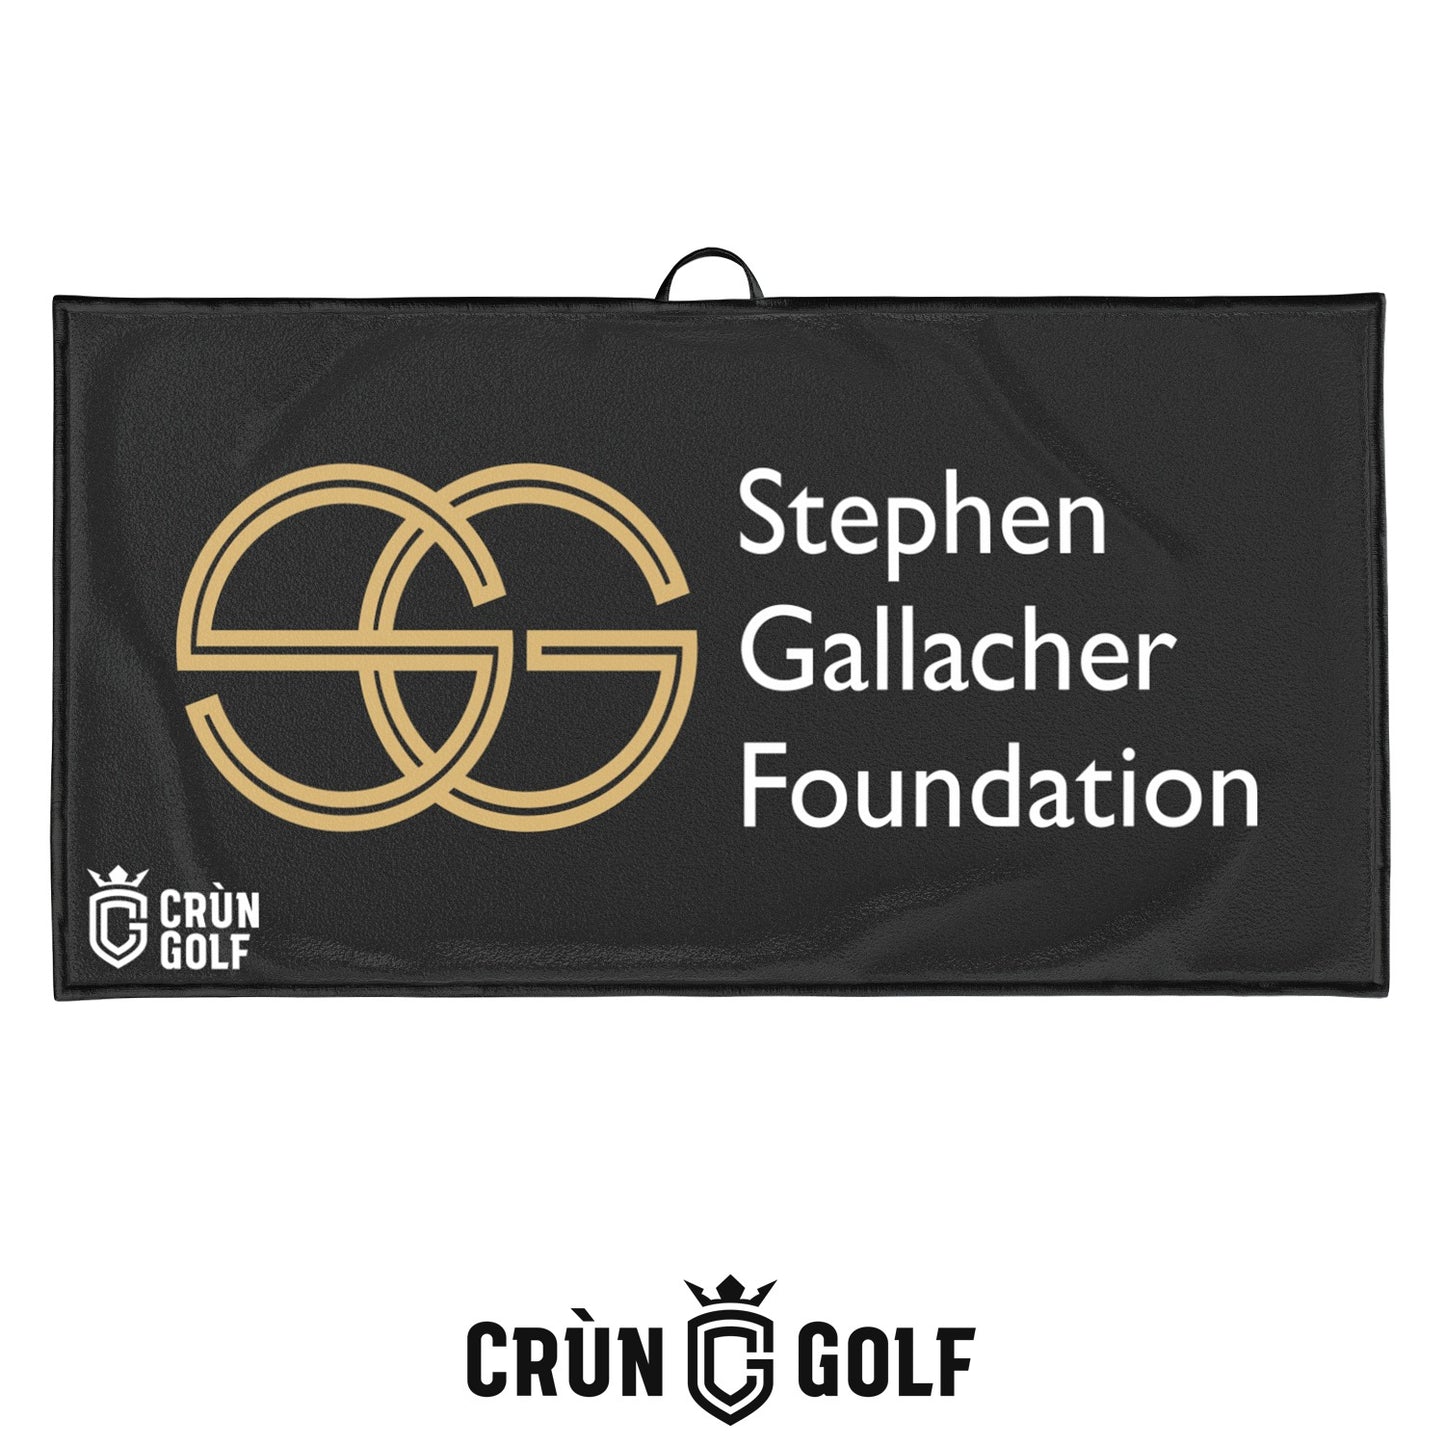 Stephen Gallacher Foundation Towel - Black